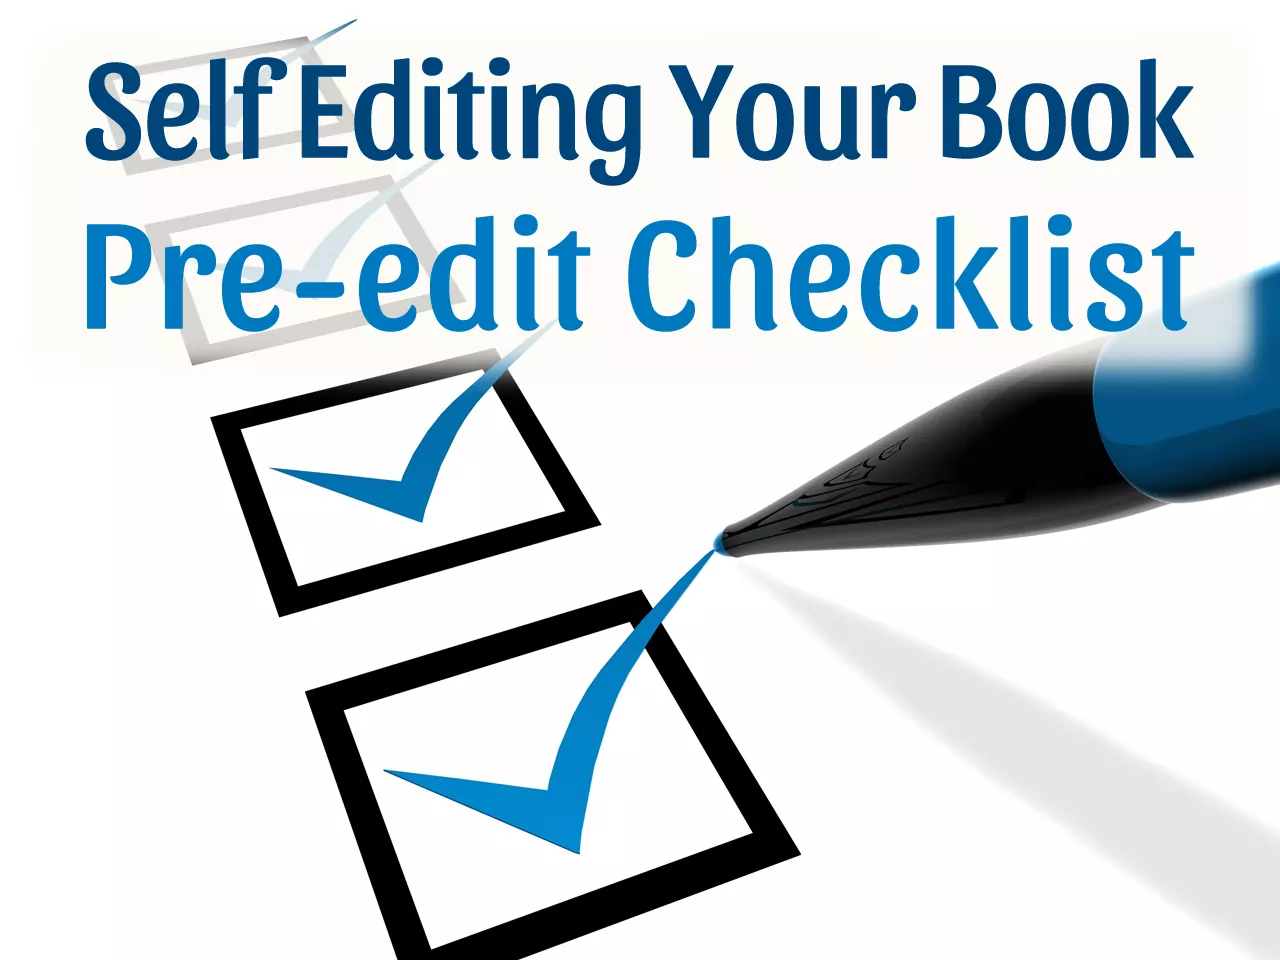 Self-editing Your Book: A Pre-edit Checklist